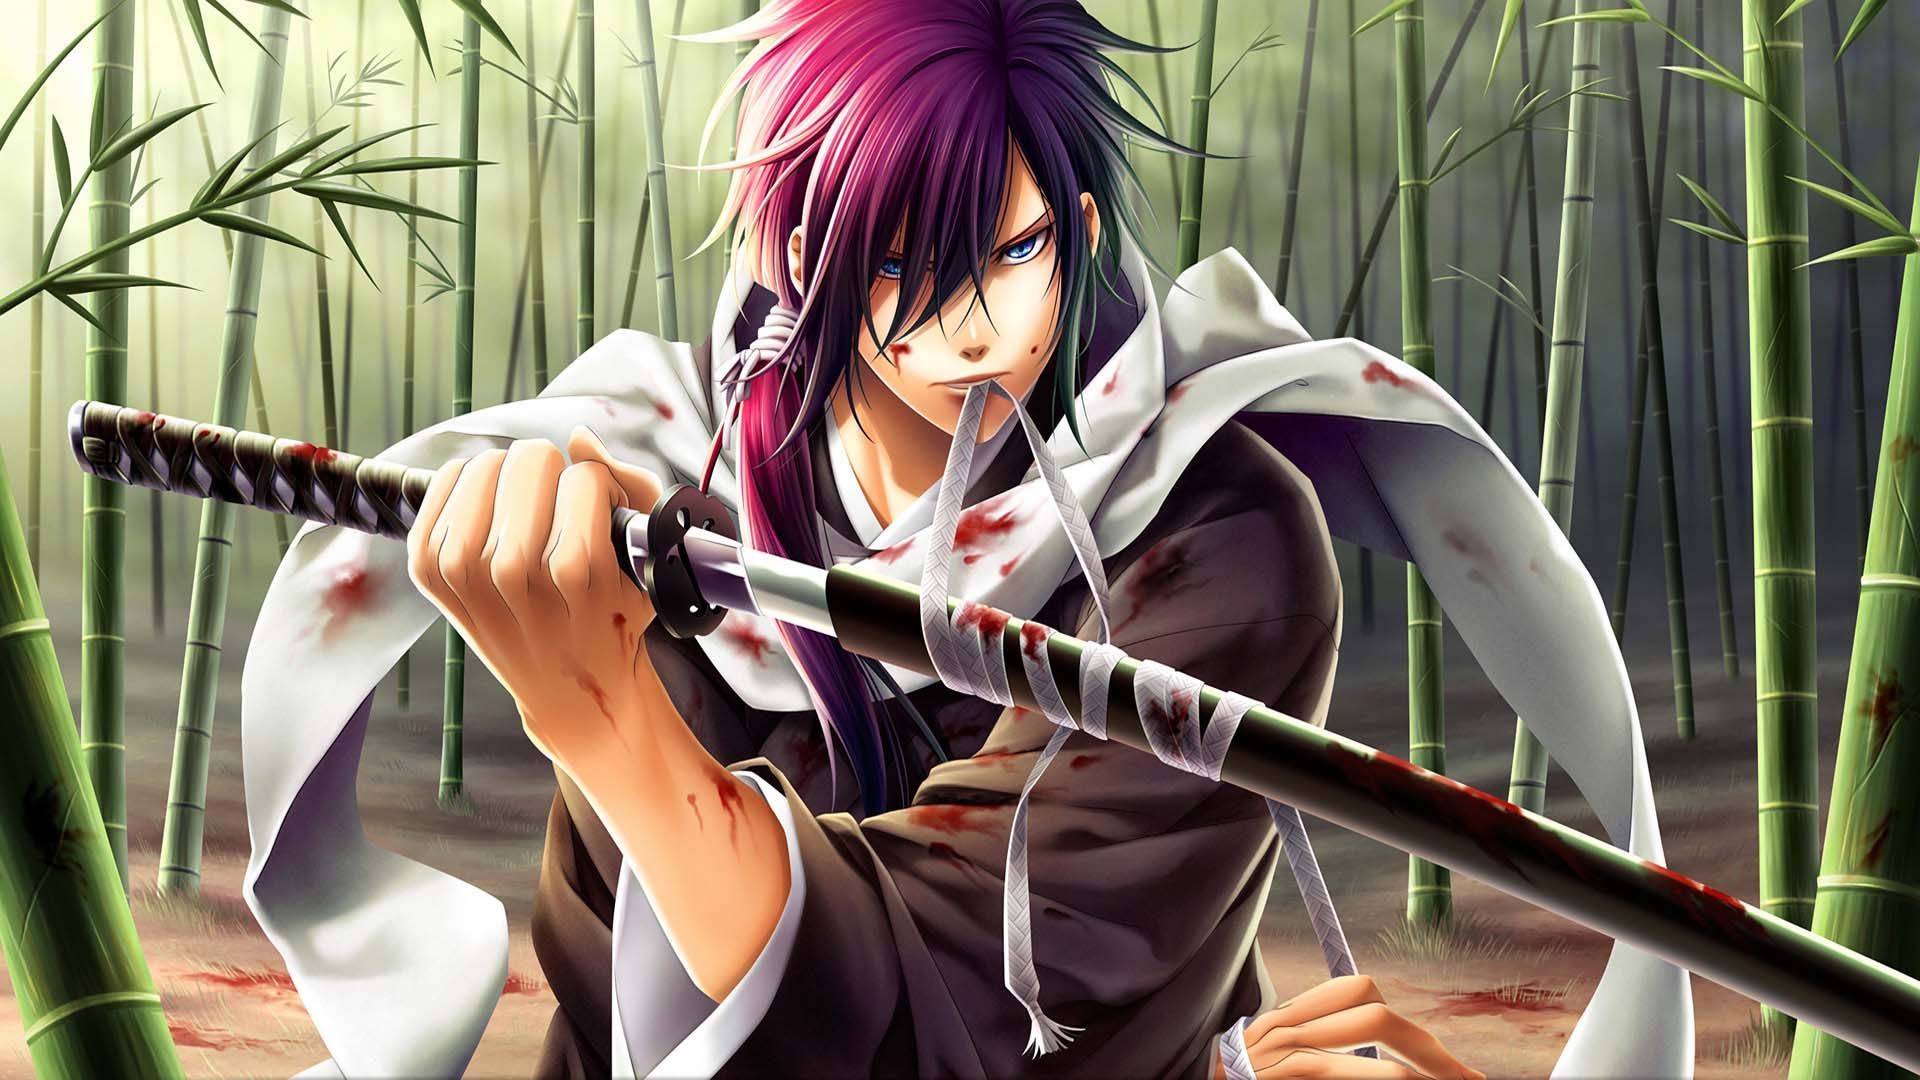 Samurai Fighting Techniques. HD Anime Wallpaper for Mobile and Desktop